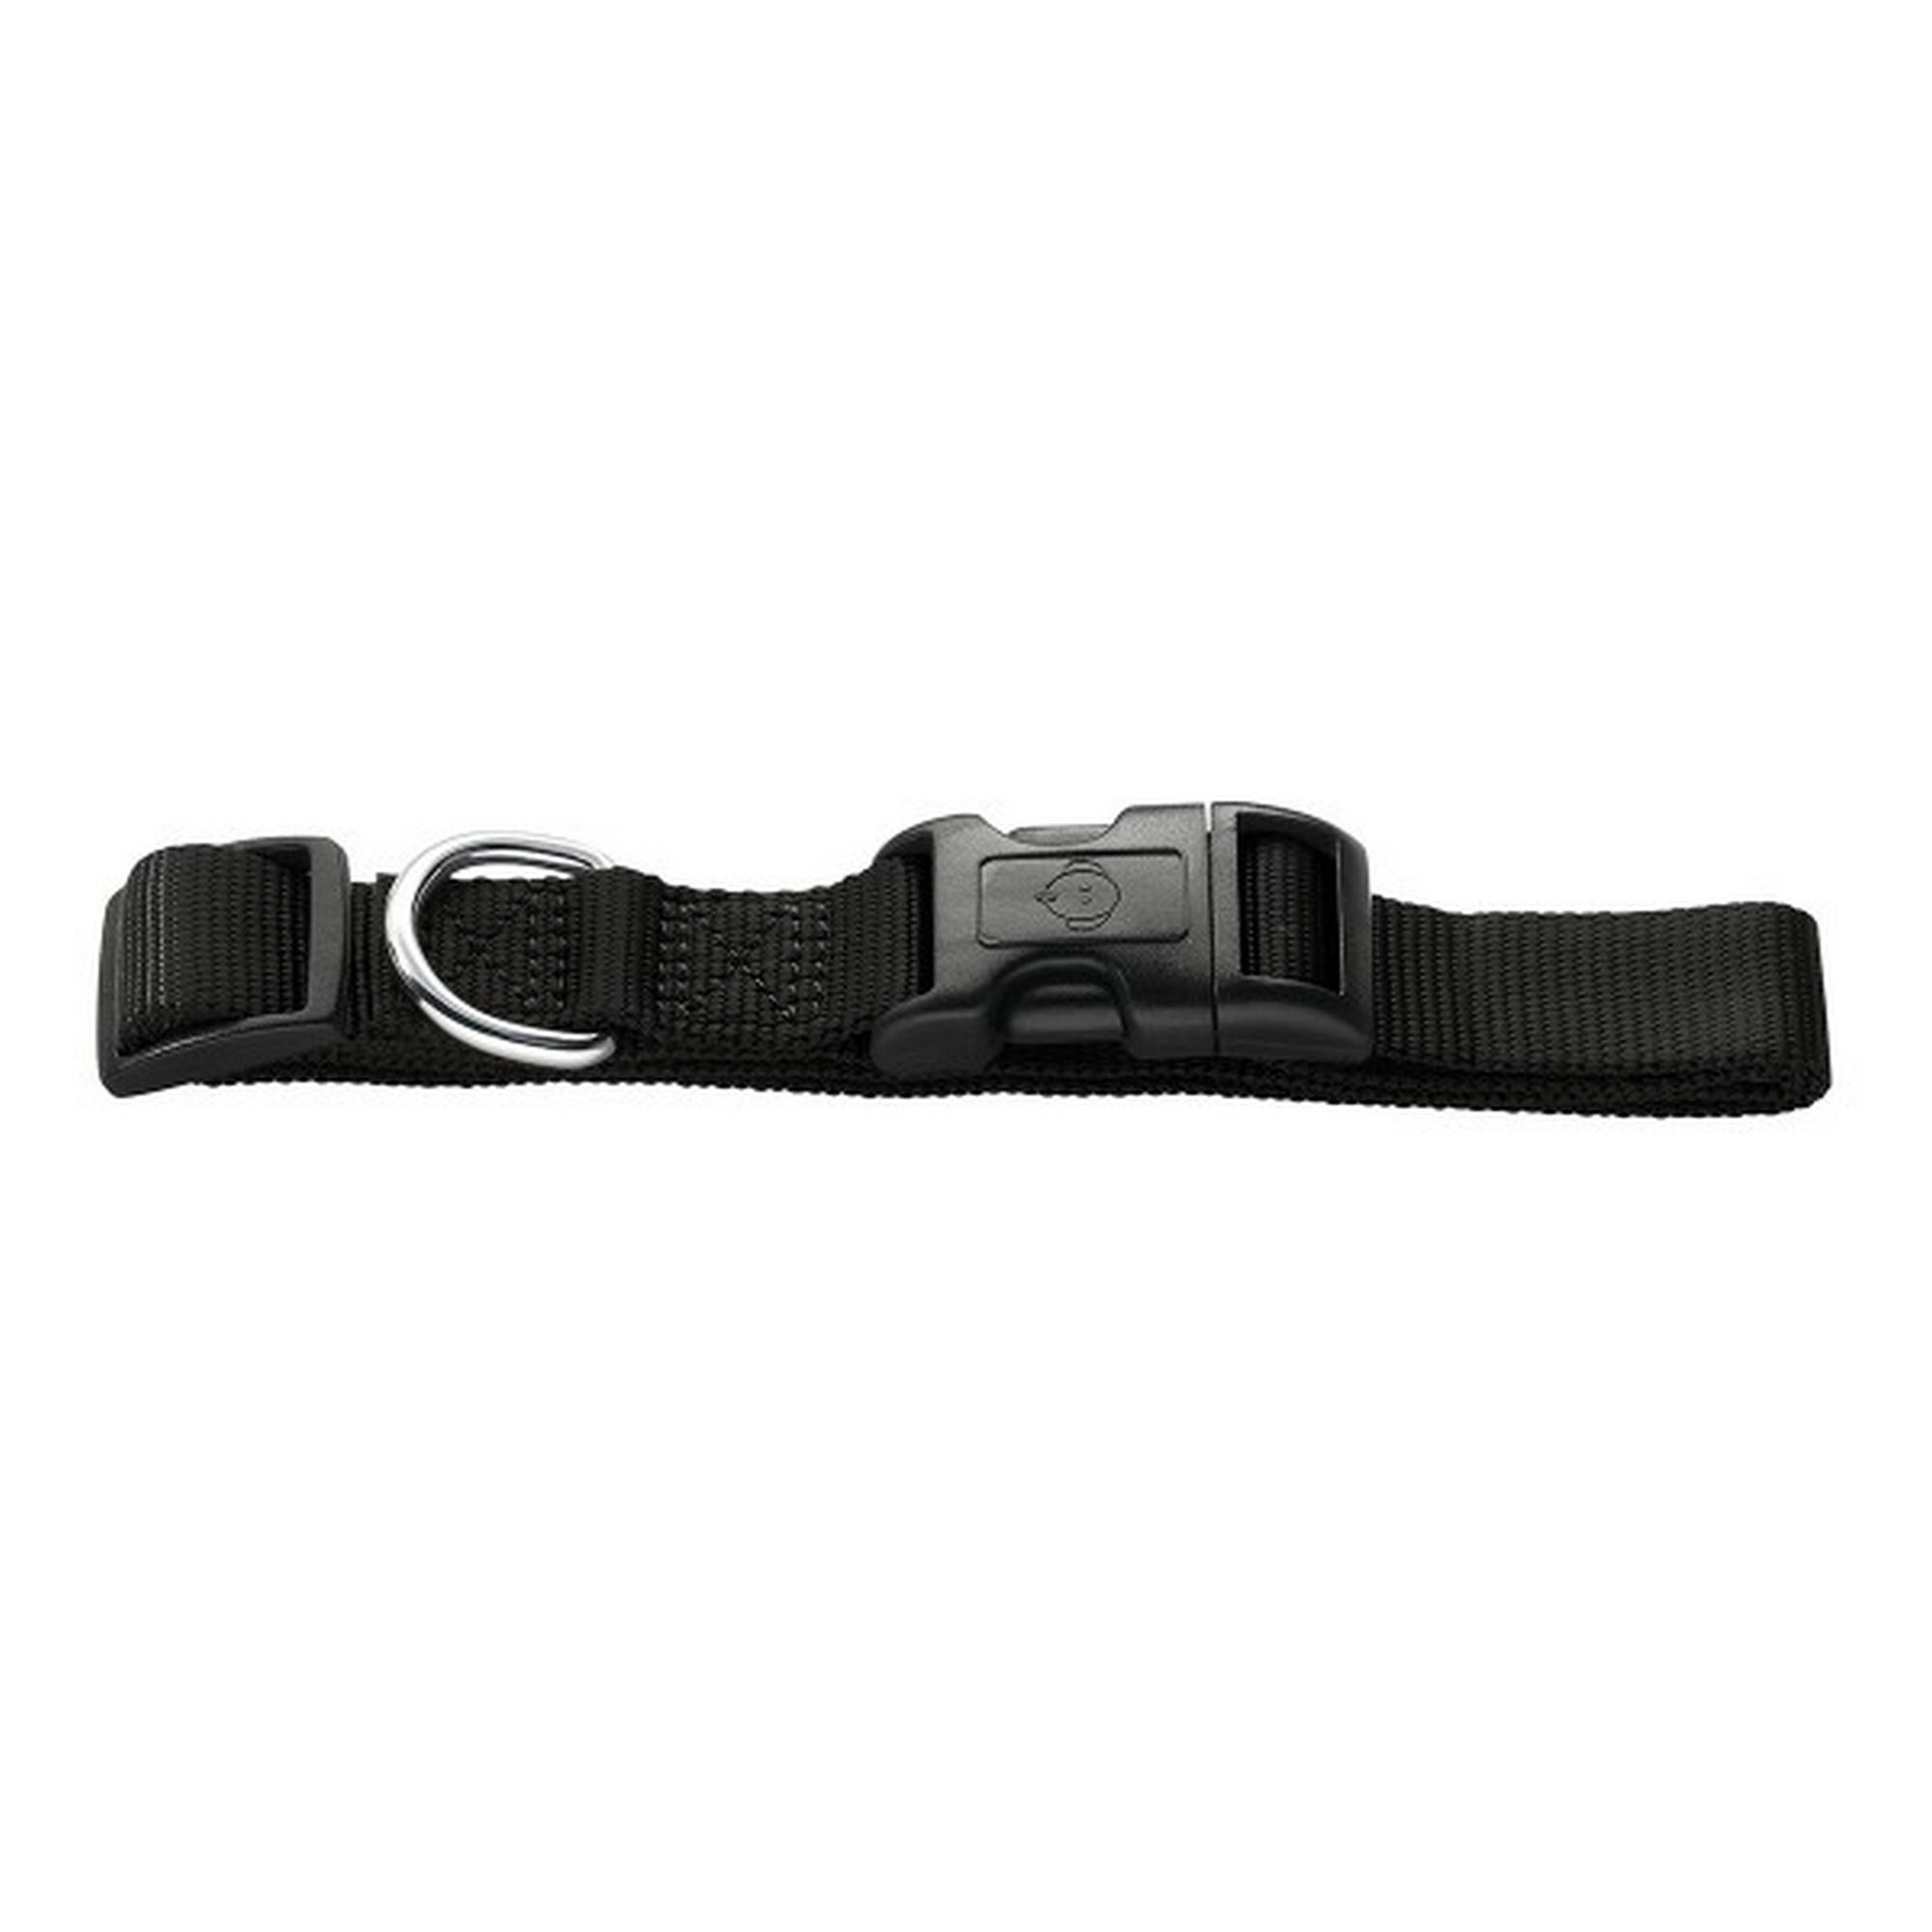 Hunde-Halsband 'Ecco Sport' schwarz, Größe L, 41-63 cm + product picture